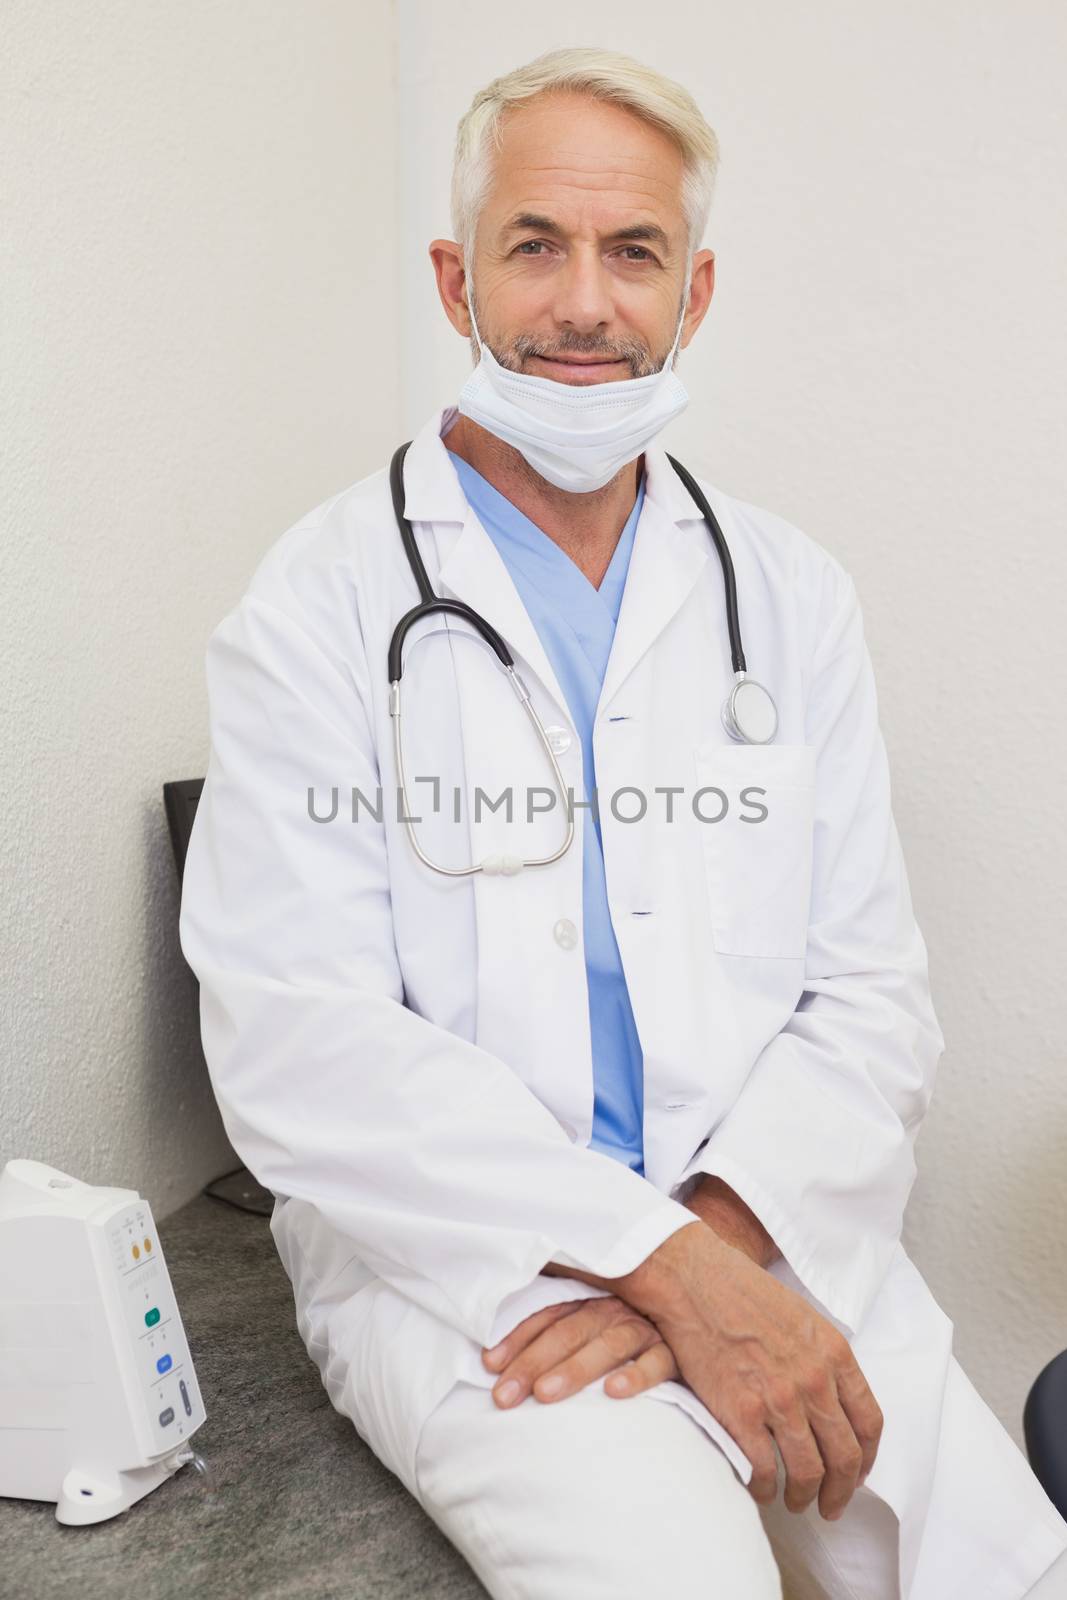 Dentist smiling at camera in lab coat by Wavebreakmedia